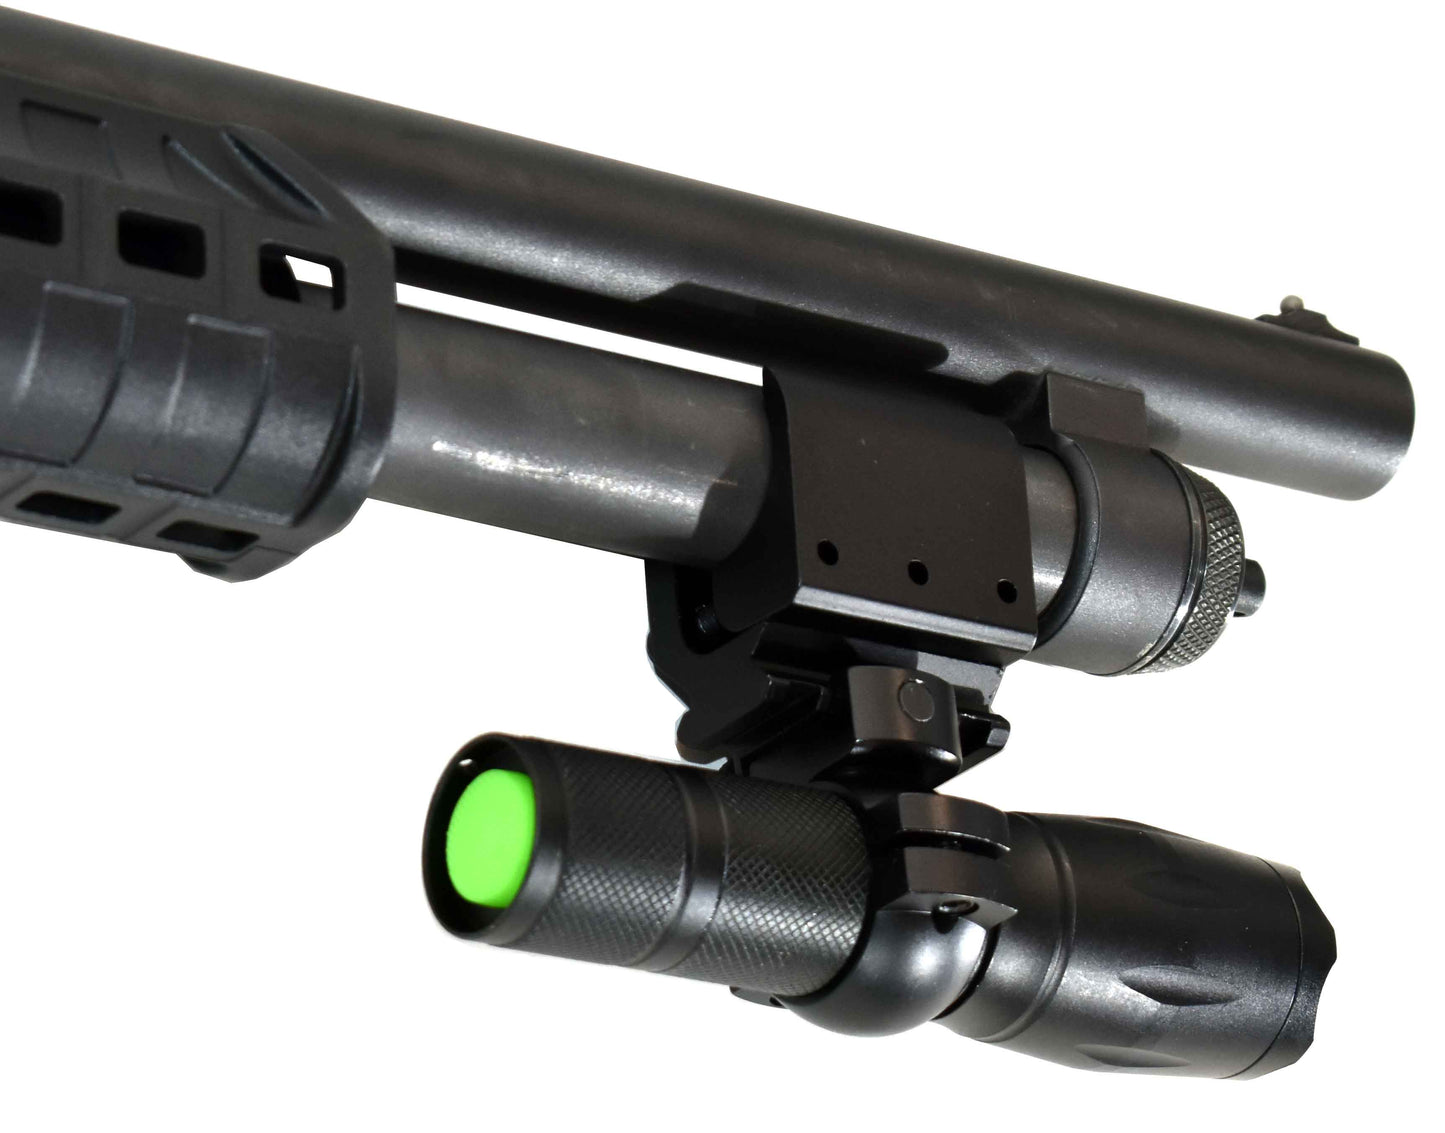 Stoeger p3000 12 gauge pump flashlight with mount combo aluminum black.